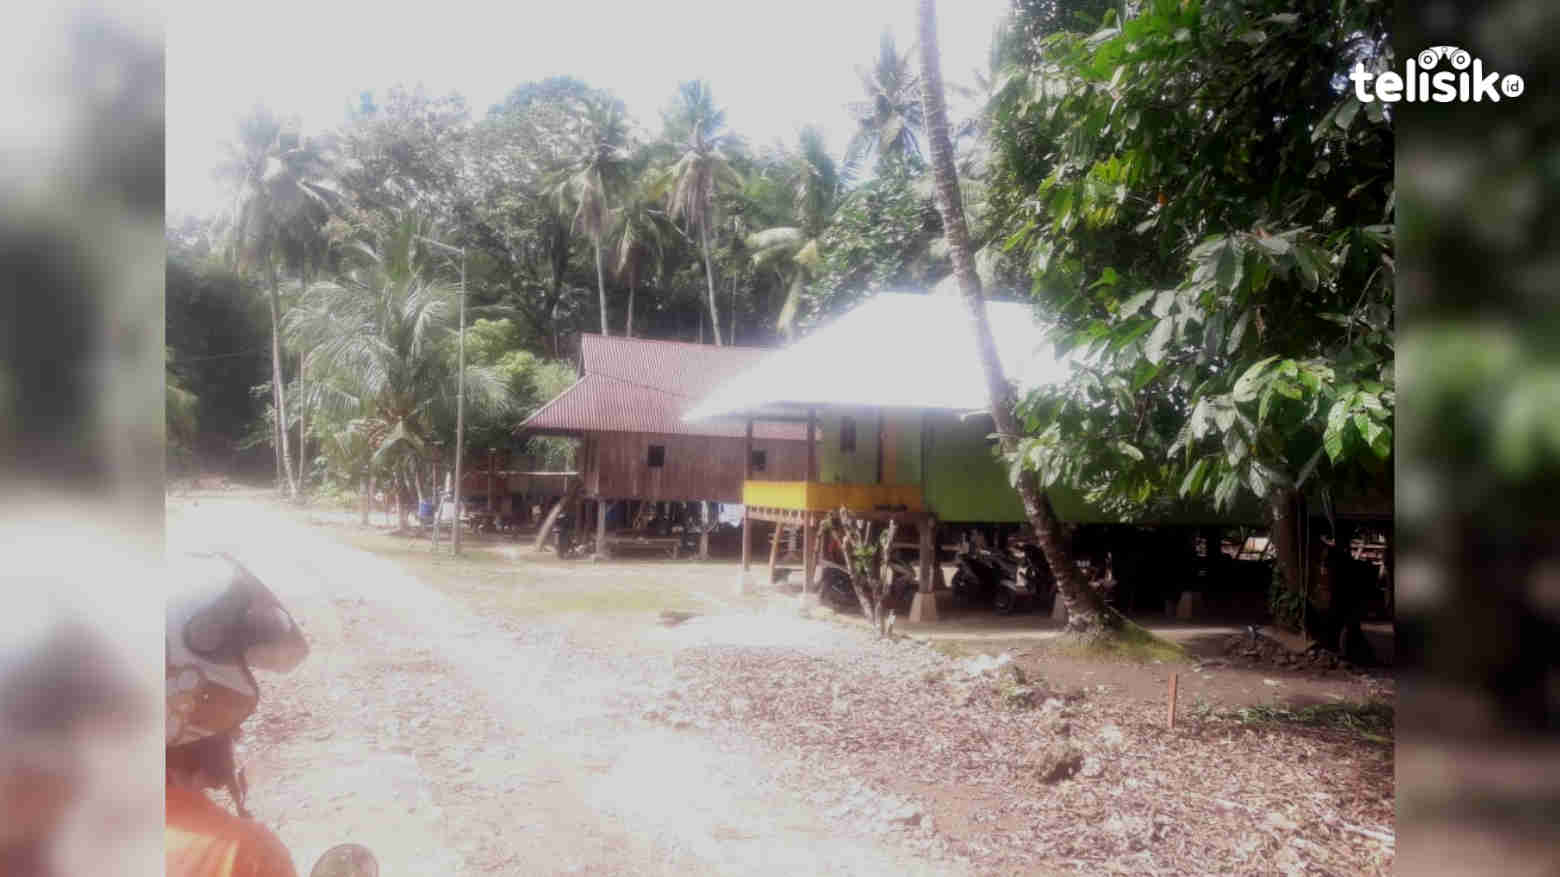 Wisata Alam Dusun Kangka Wakatobi, Sajian Kampung dalam Ekosistem